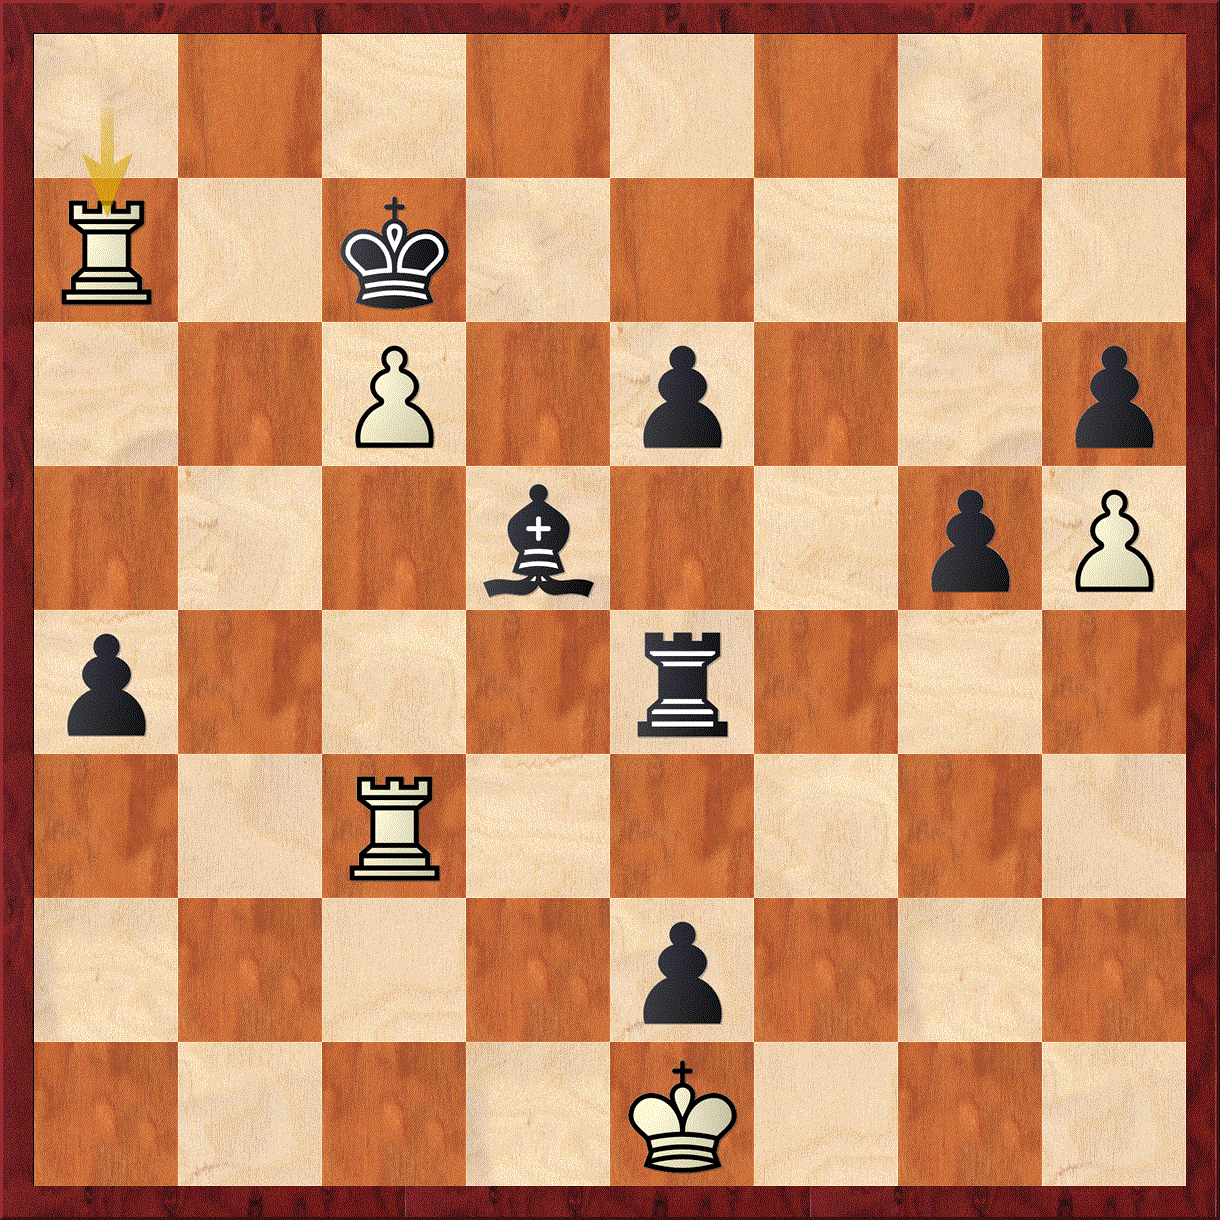 Magnus Carlsen vs GM Luis Paulo Supi, Blitz Chess 3+0, ChessCom